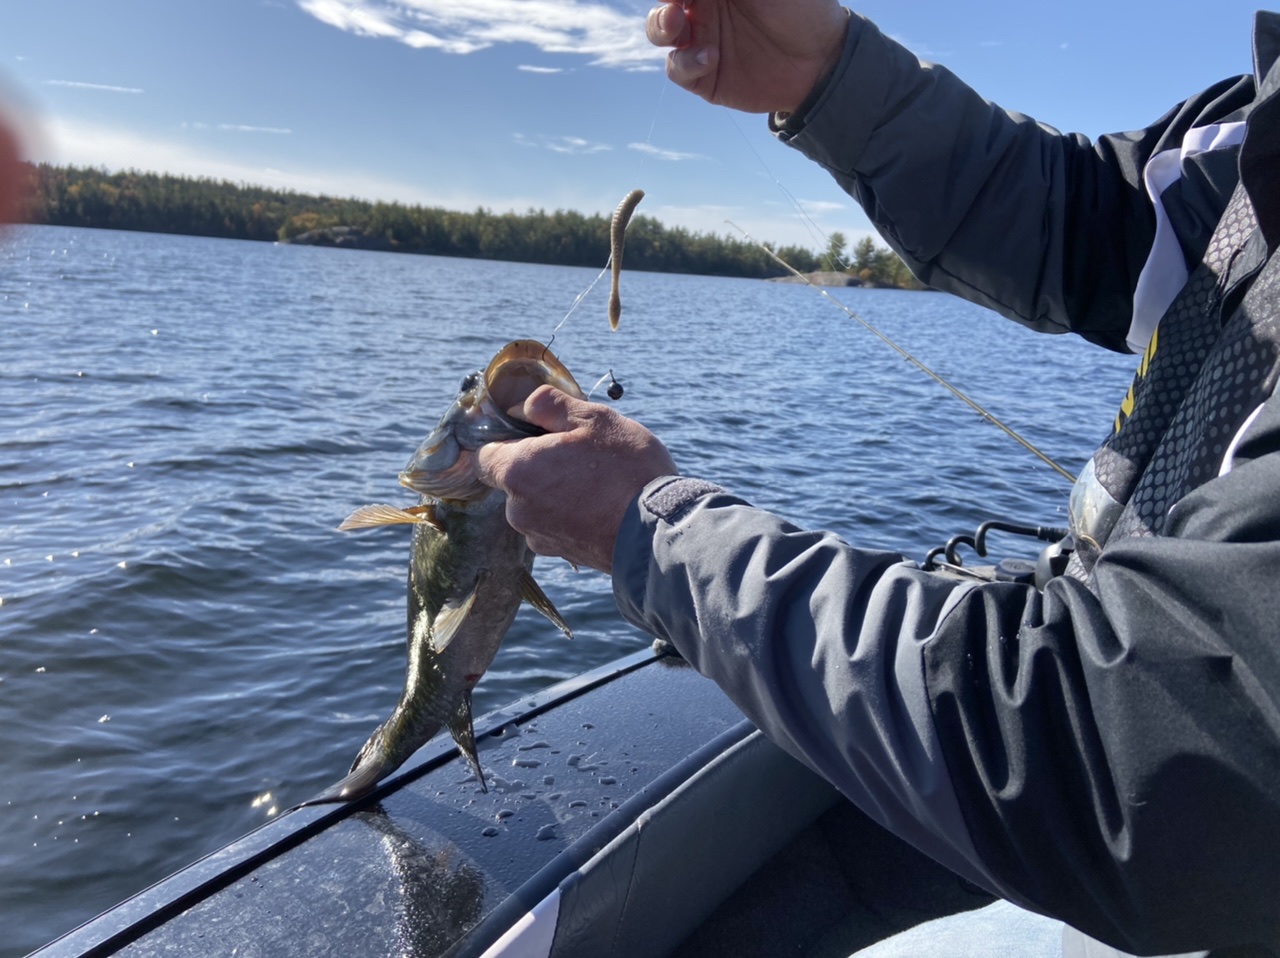 Drop Shot Walleye: Learn this Effective Fishing Technique